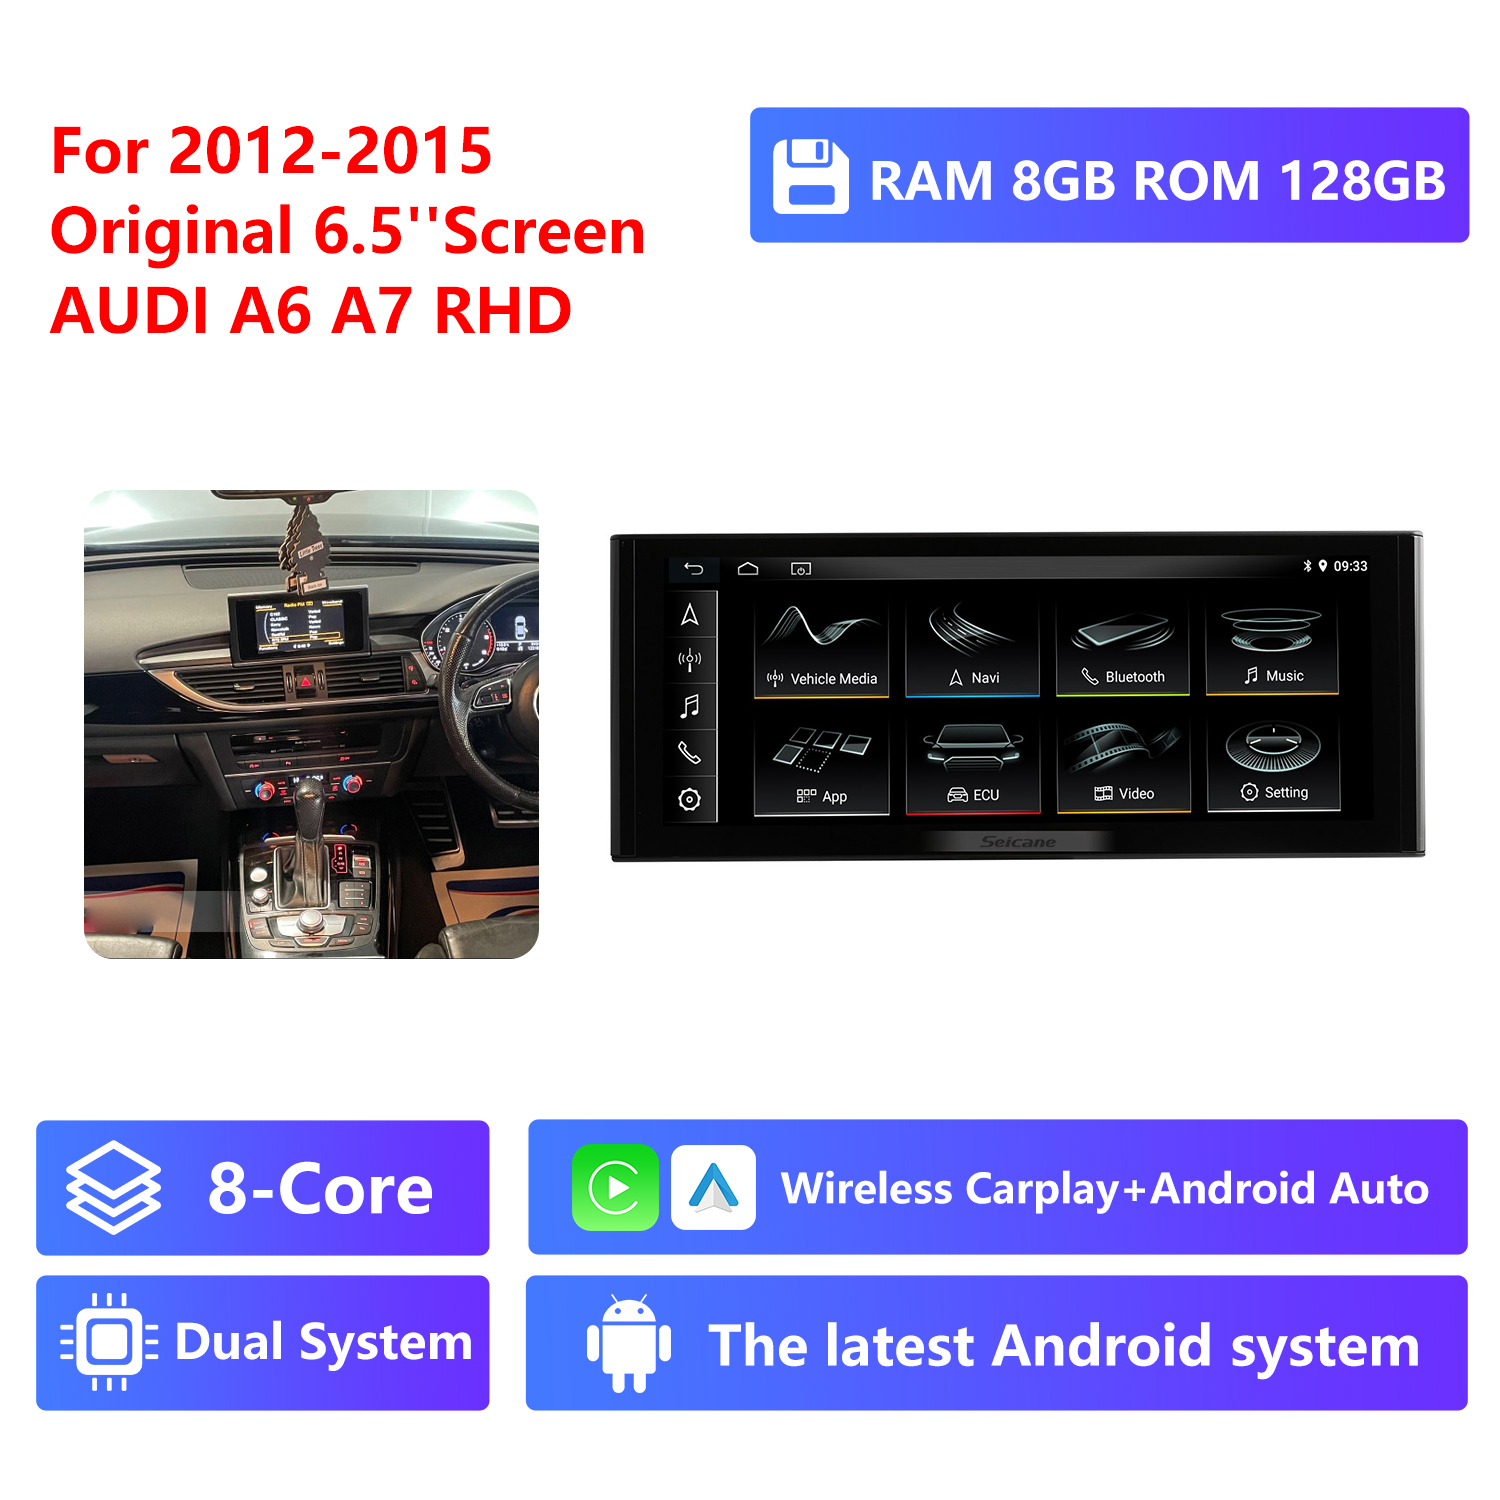 8-Core RAM 8G ROM 128G,2012-2015, Original 6.5"Screen,RHD